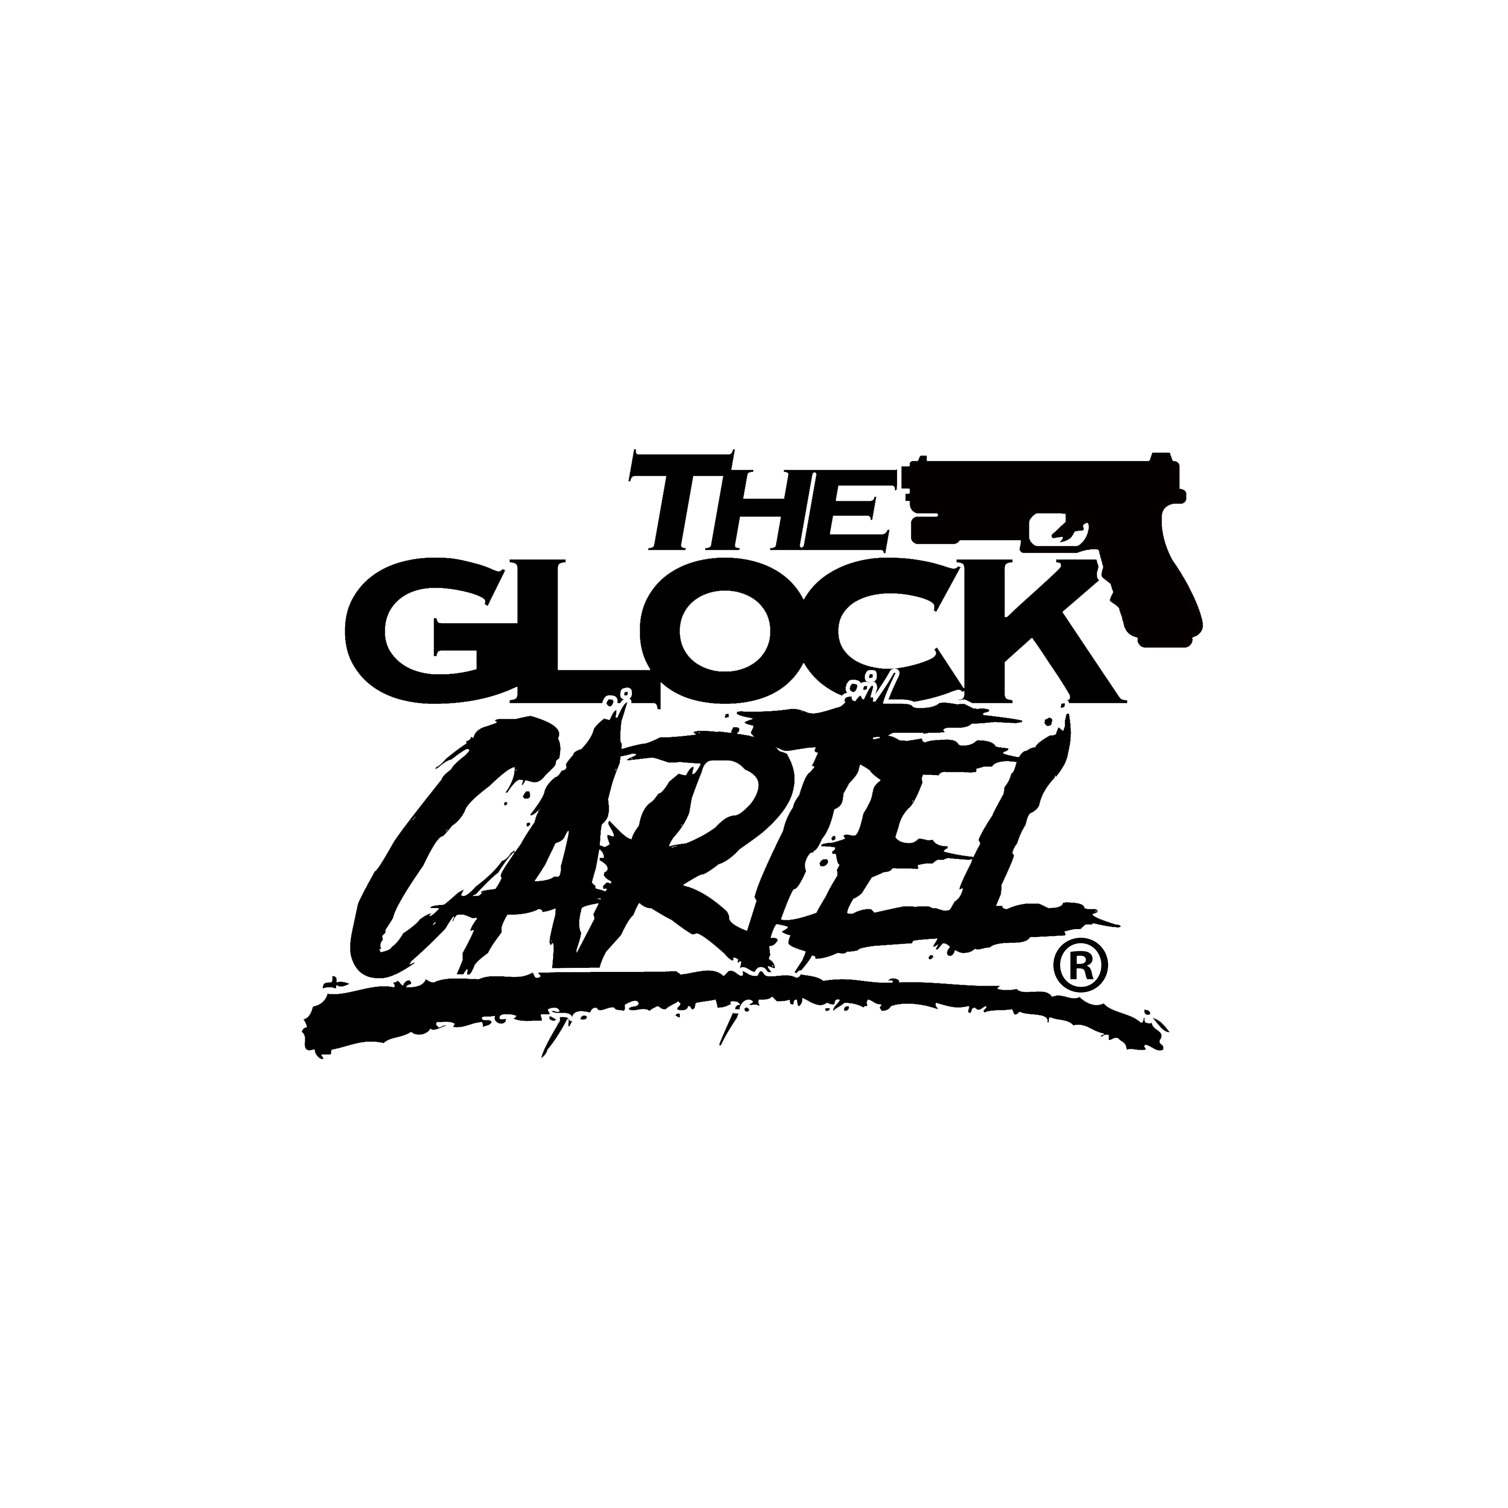 The Glock Cartel